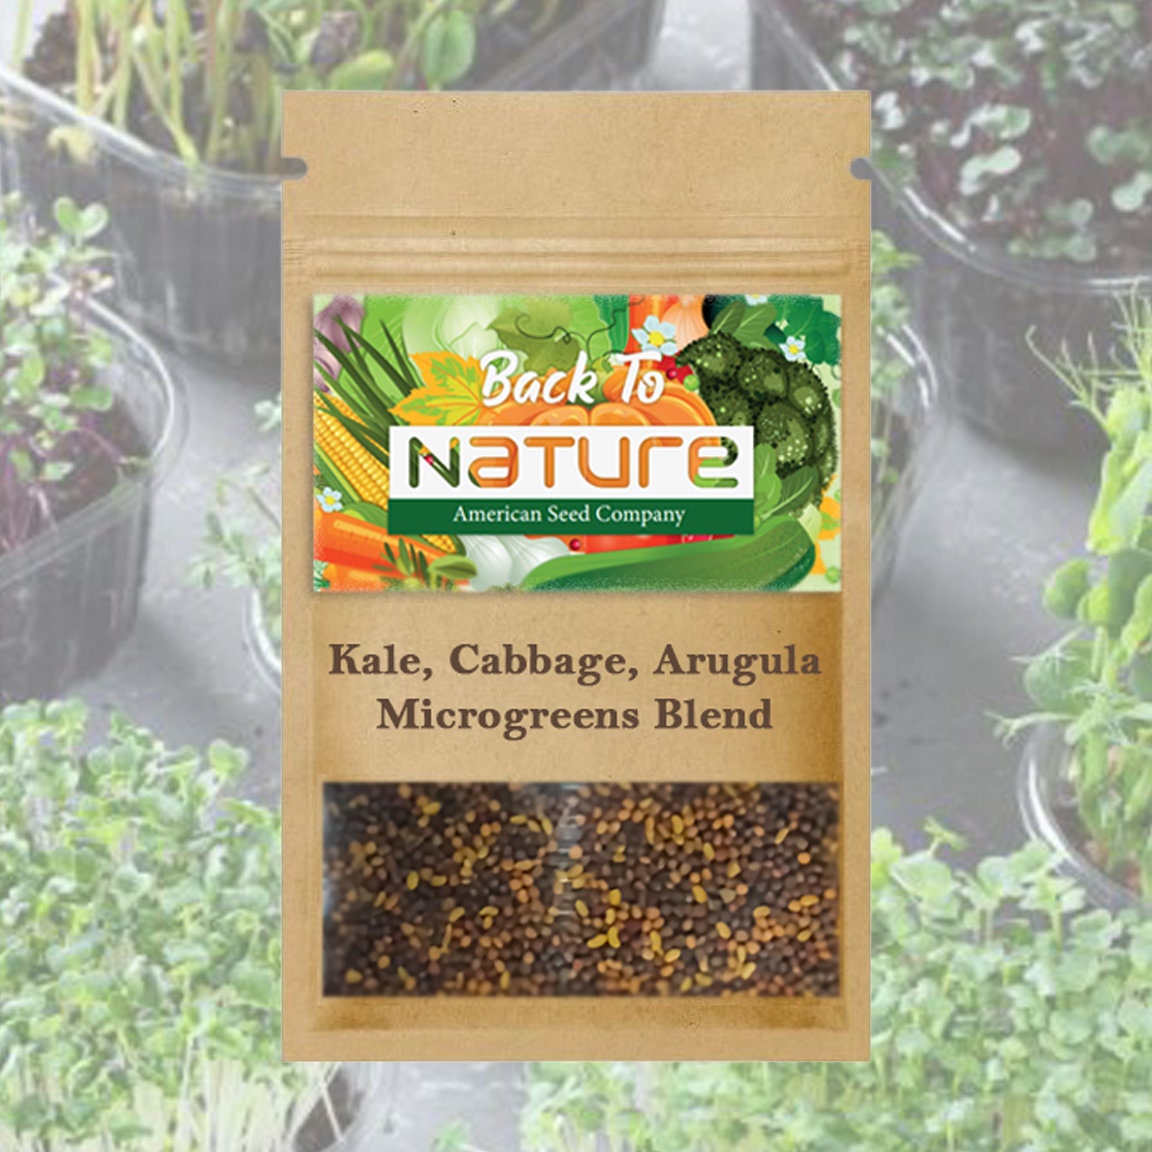 Kale, Cabbage & Arugula Microgreens - Organic Seeds - Non Gmo - Heirloom Seeds – Microgreen Seeds - Fresh USA Garden Seeds - Grows Fast